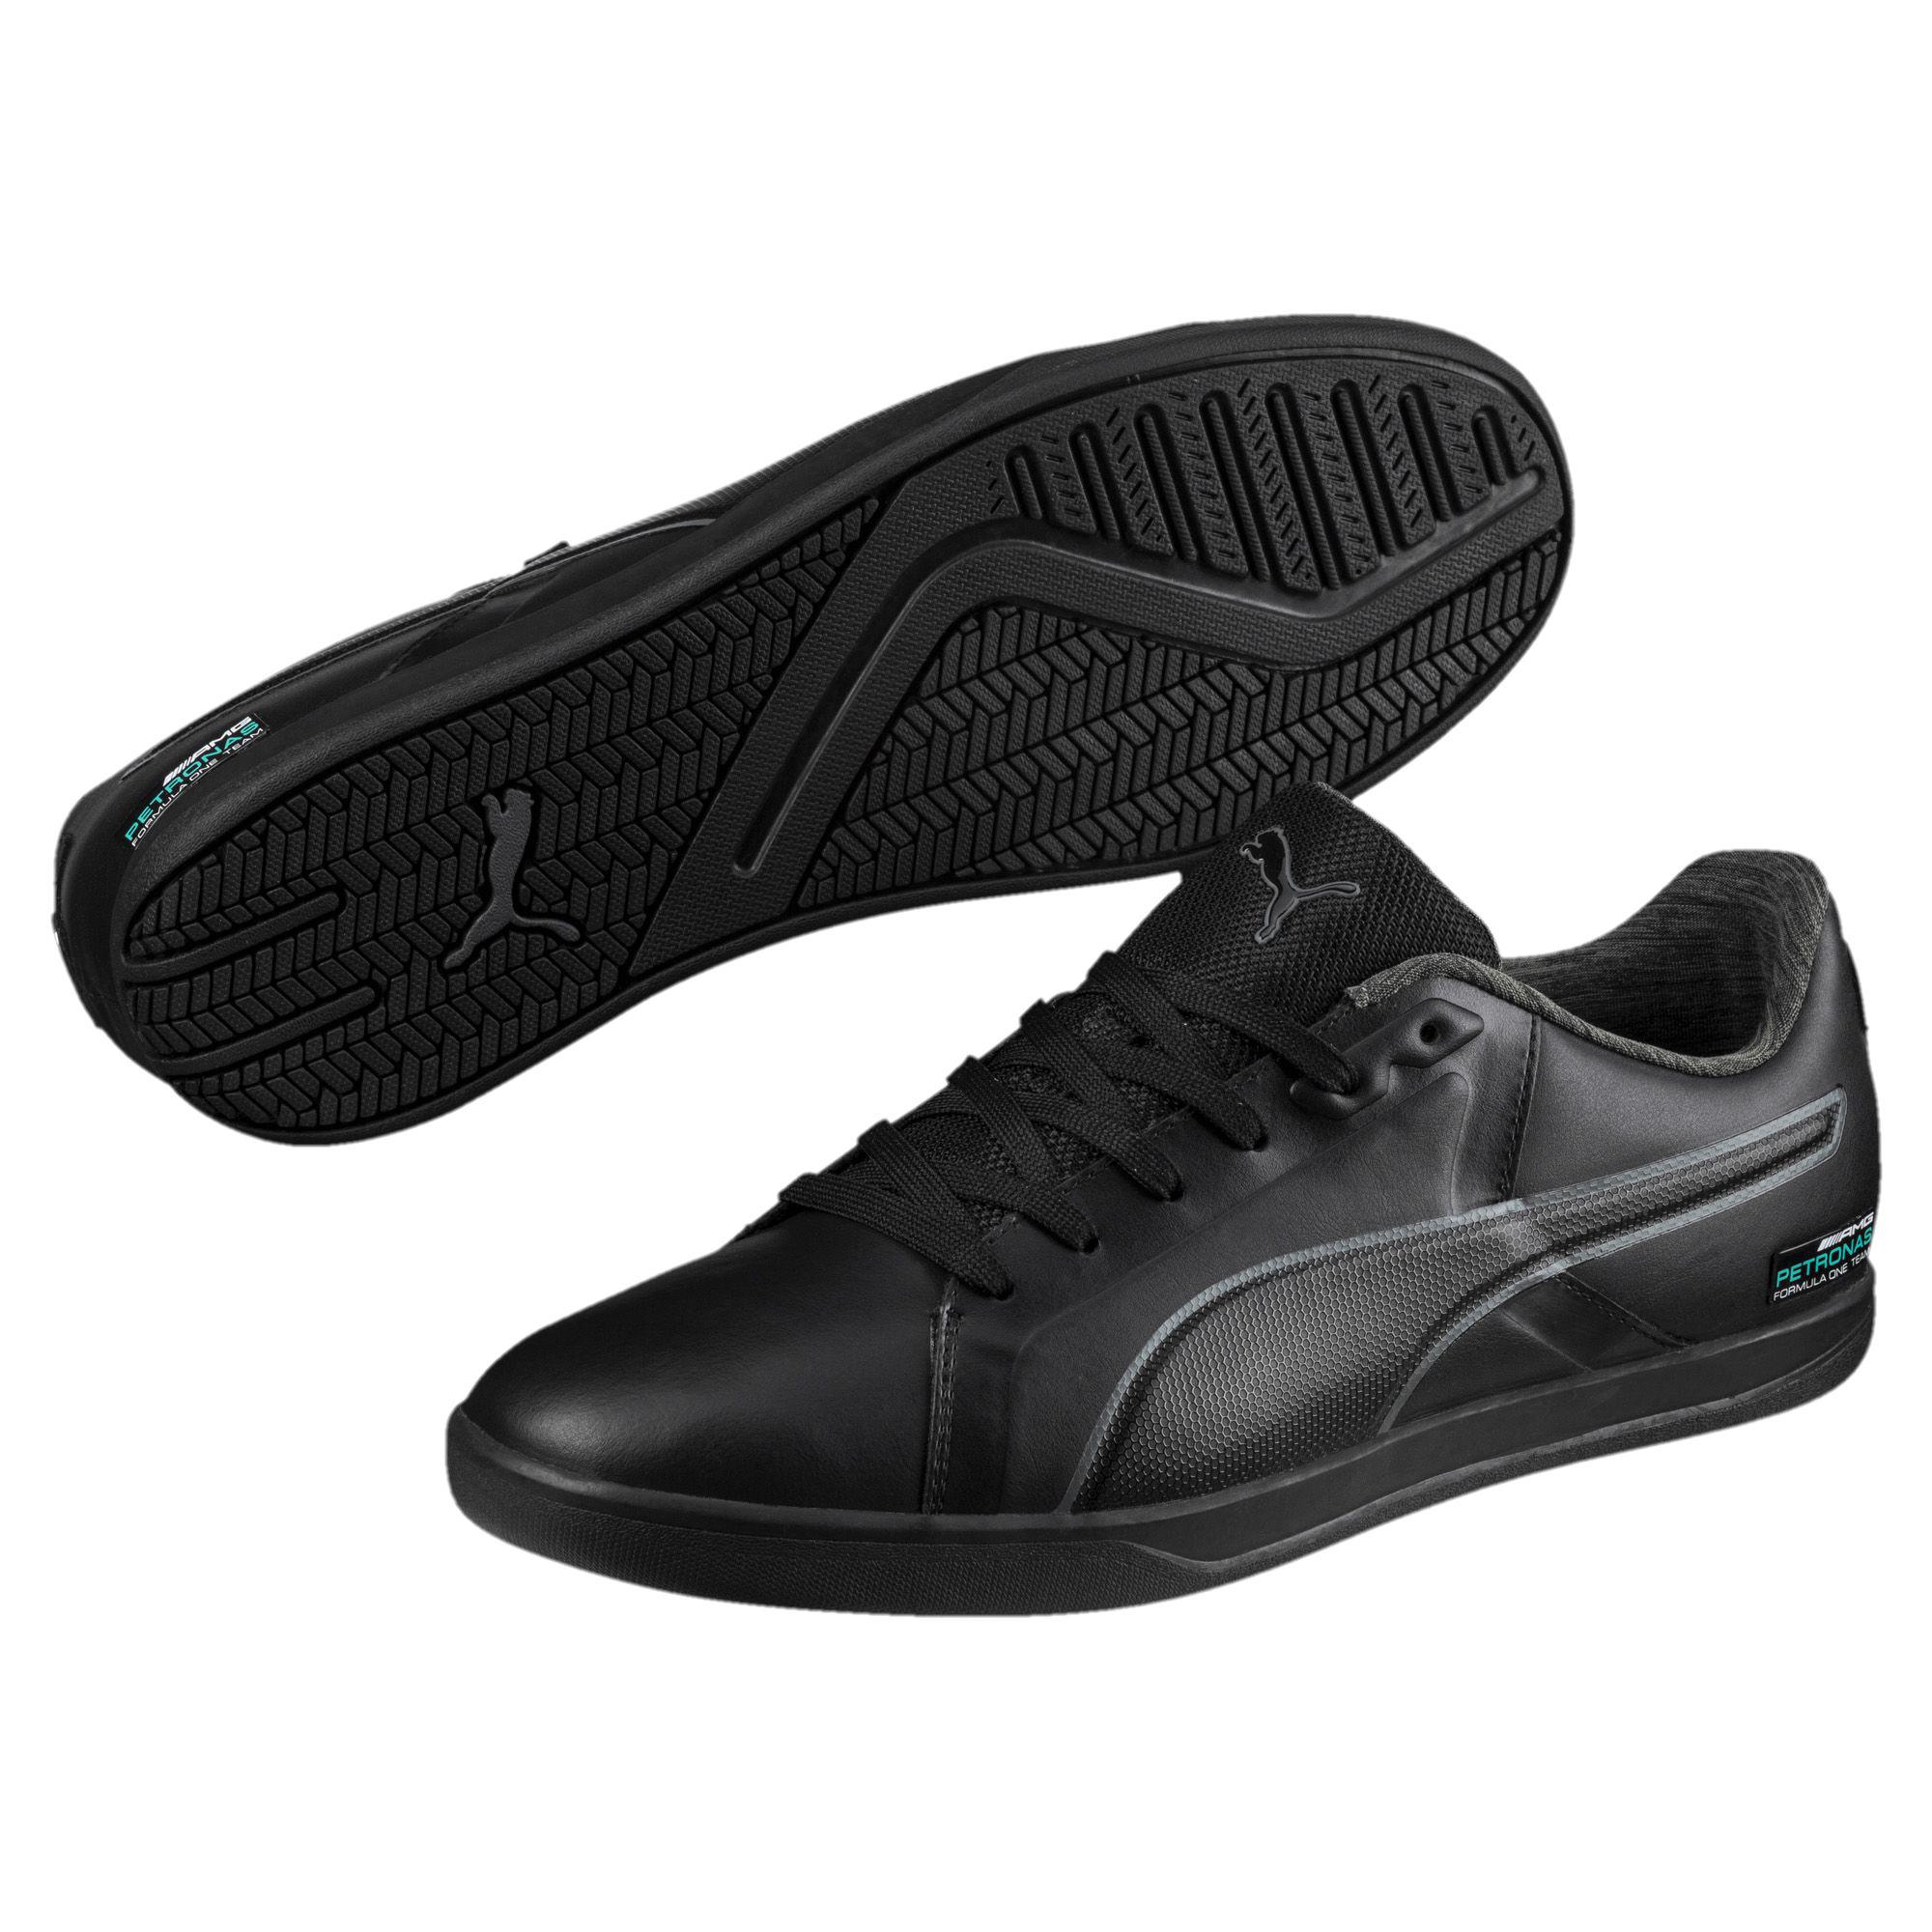 Lyst - PUMA Mercedes Amg Petronas Court Men's Shoes in Black for Men